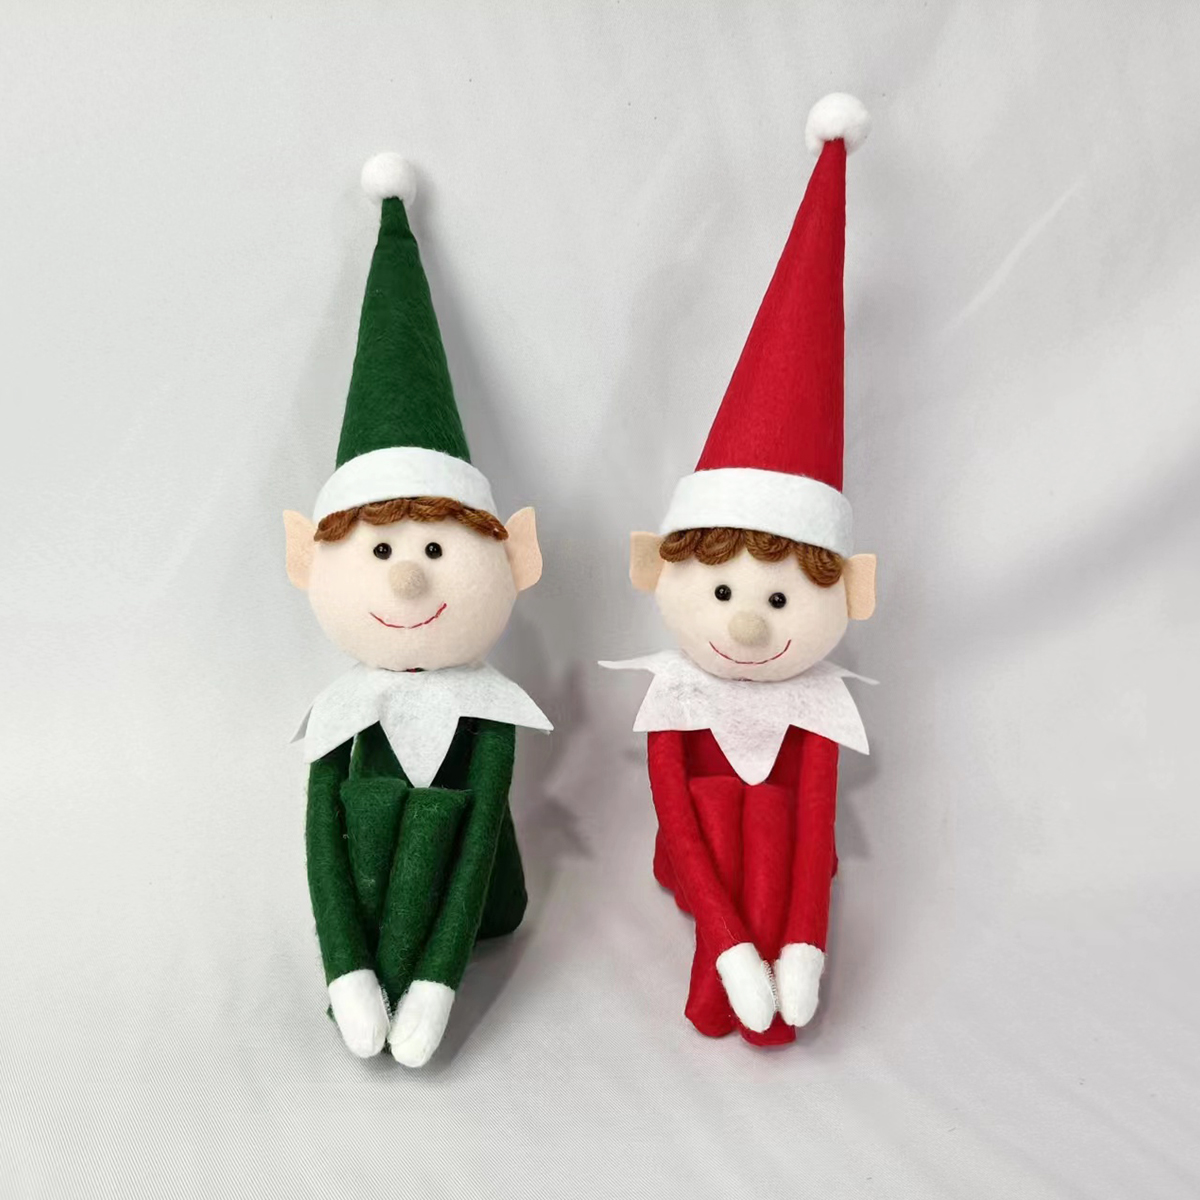 Cute Christmas Mini Elf Doll - Holiday Toy for Festive Fun!